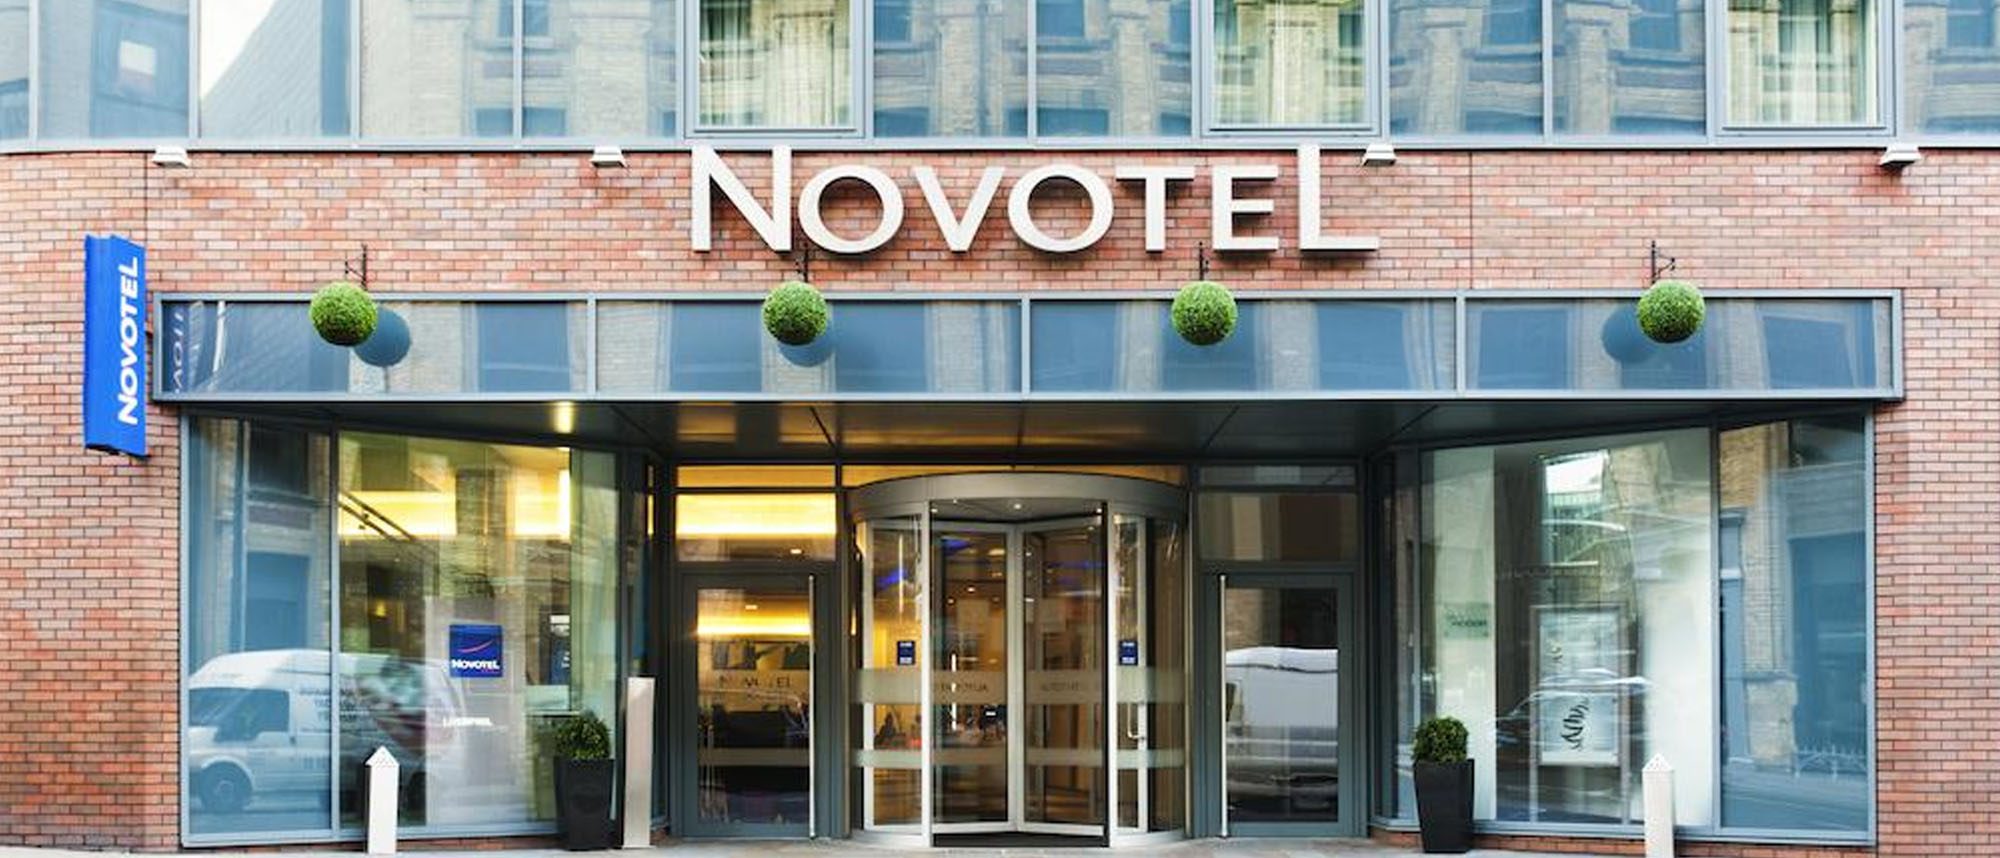 Novotel Liverpool